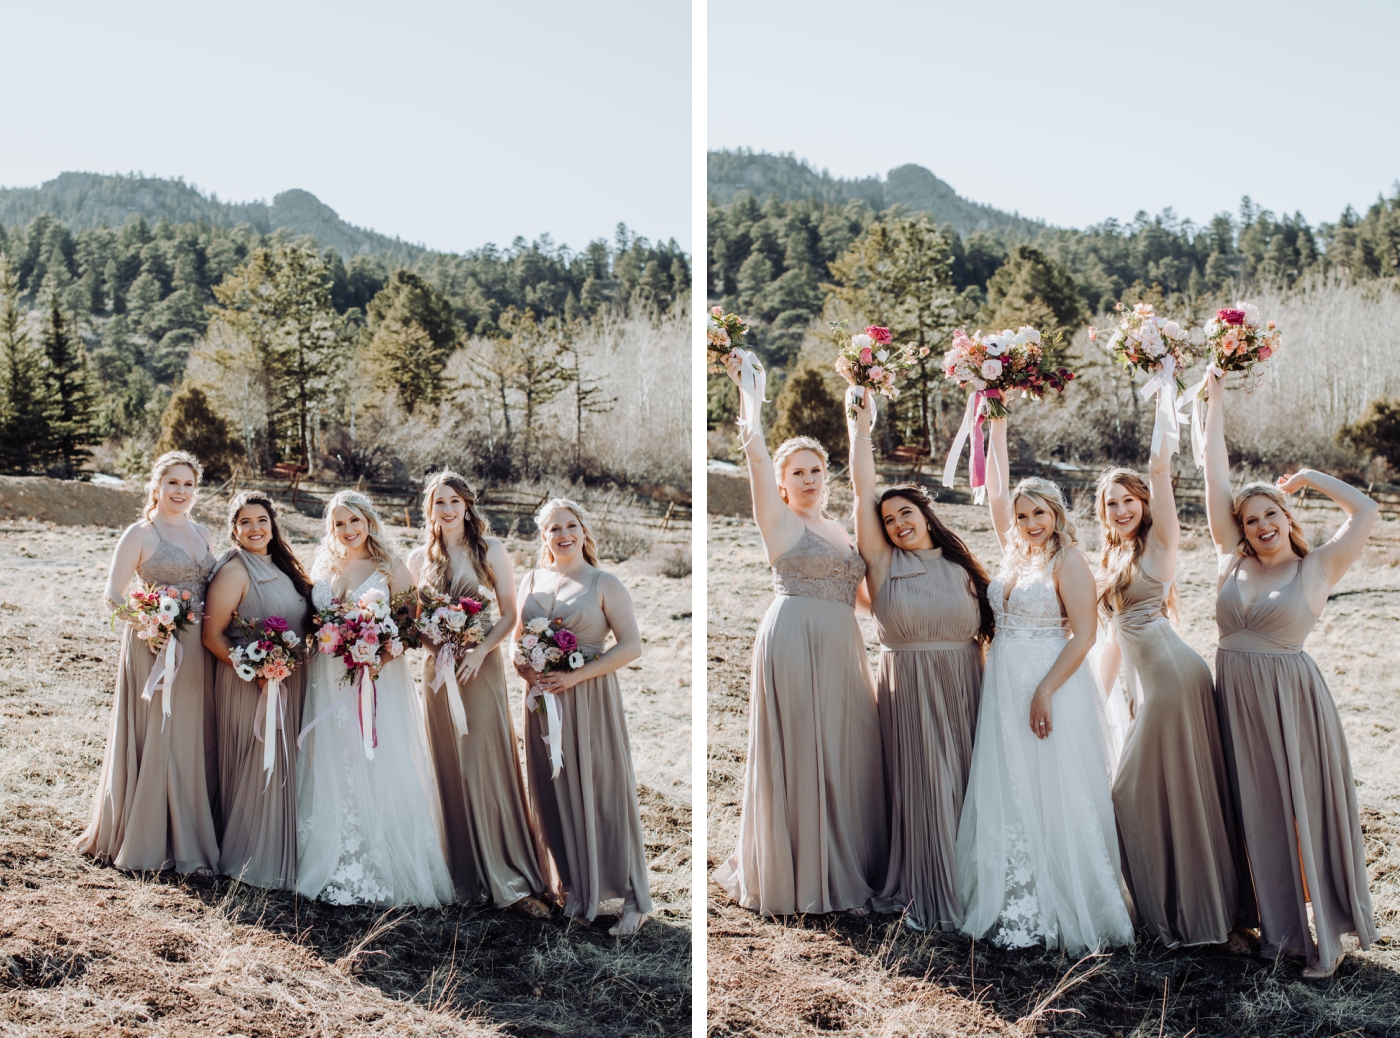 Tan and mauve bridesmaids dresses